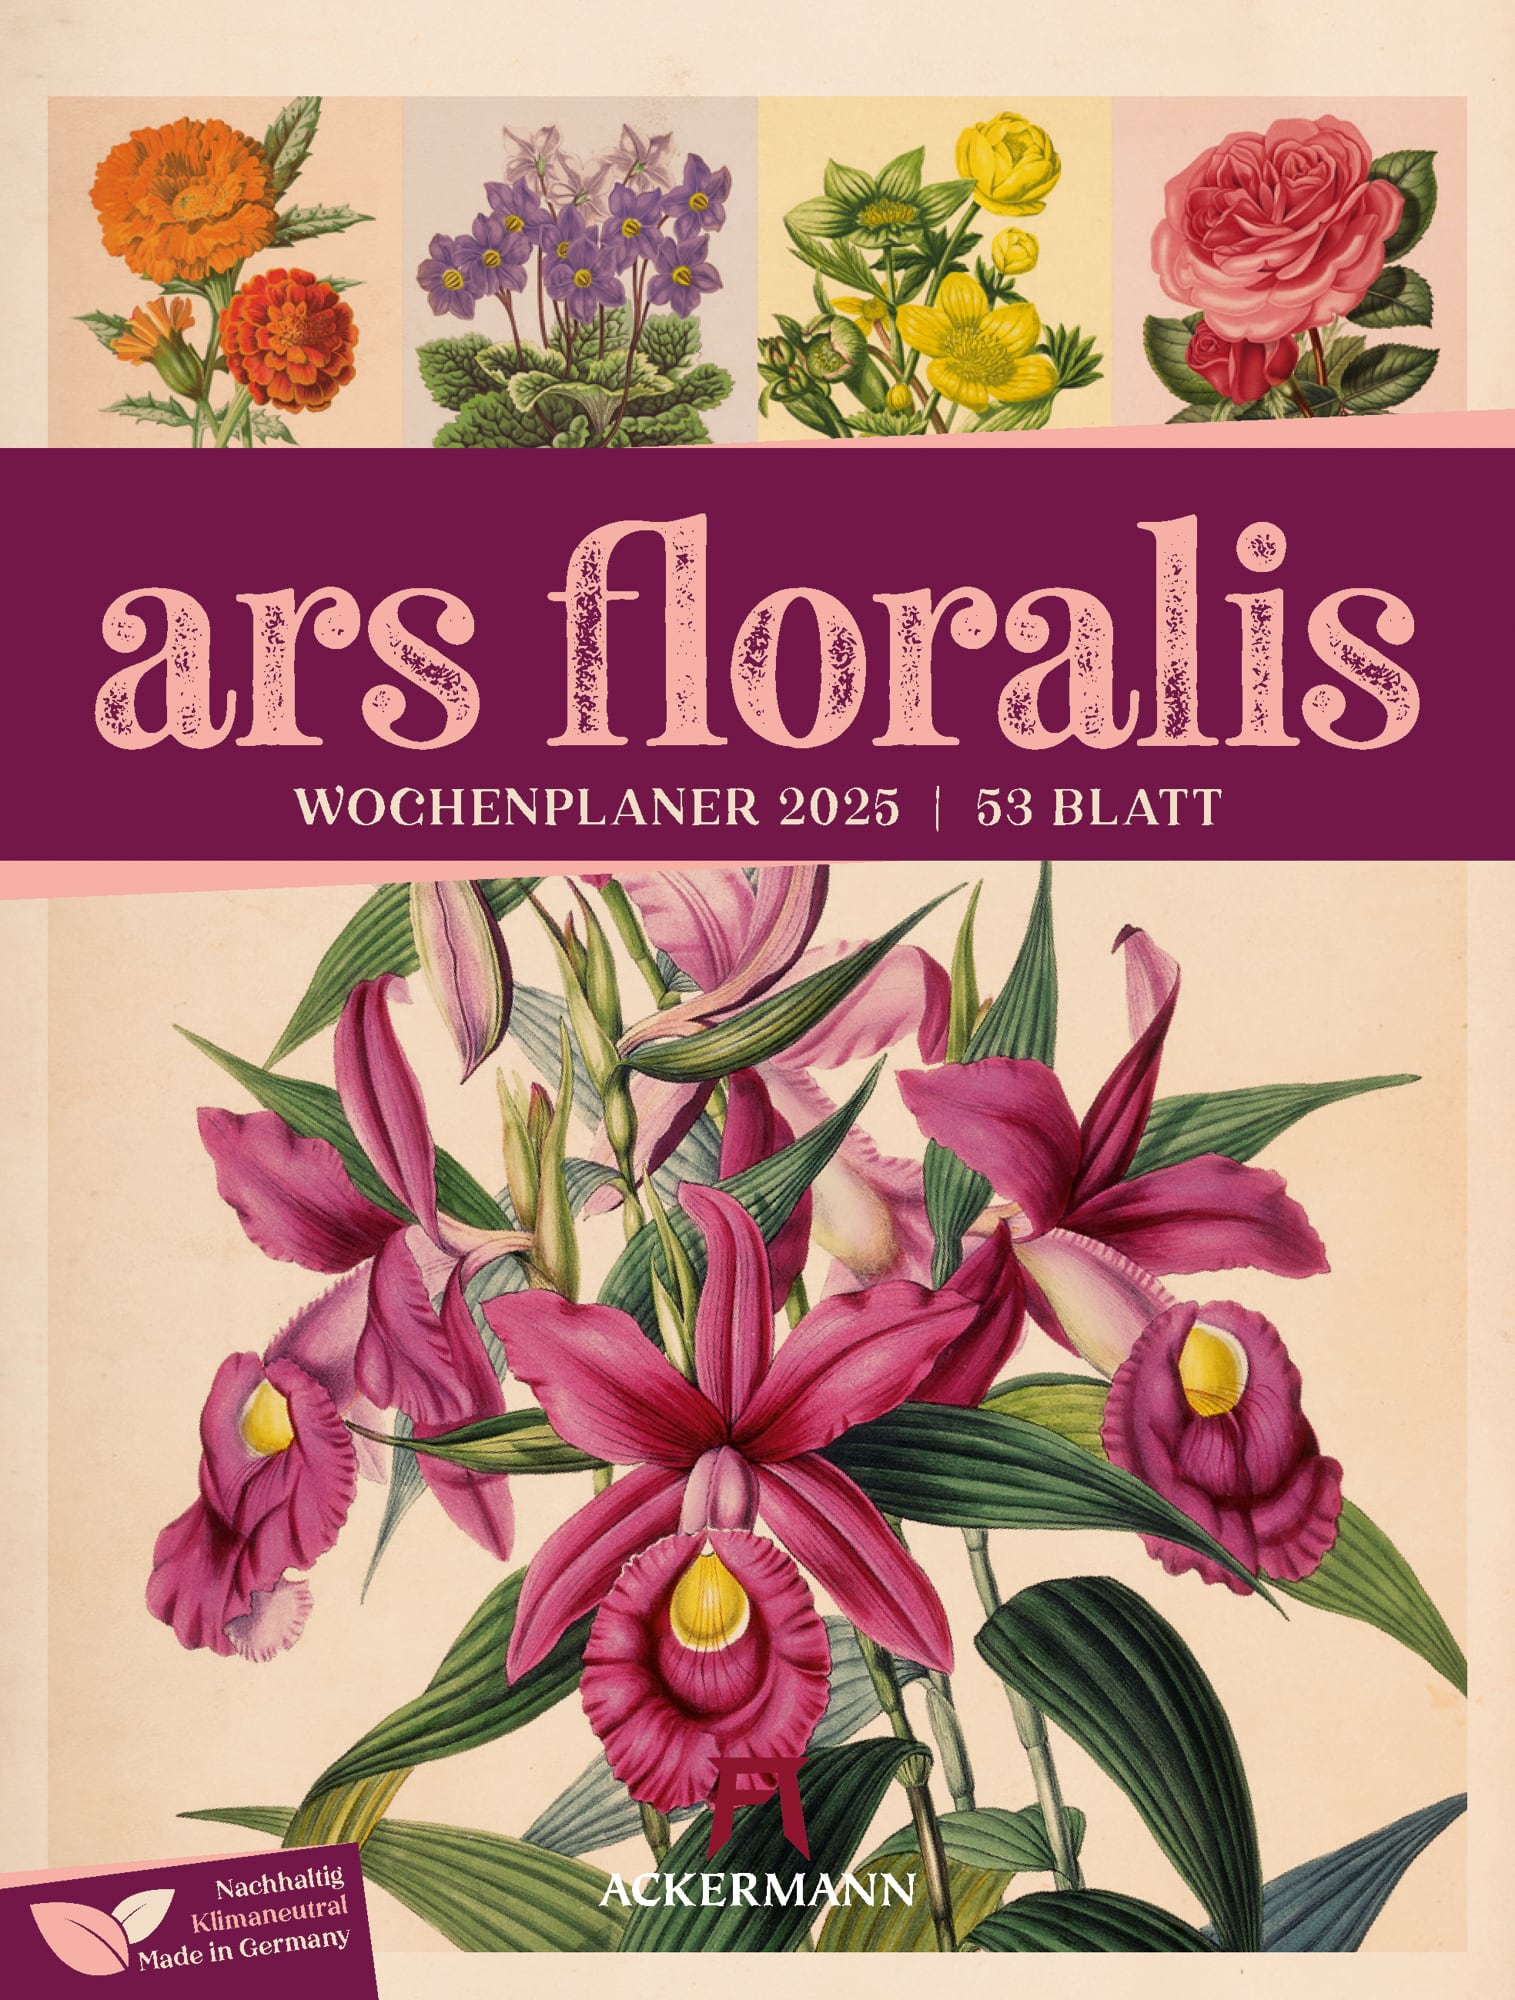 Ackermann Calendar Ars Floralis 2025 - Weekly Planner - Cover Page